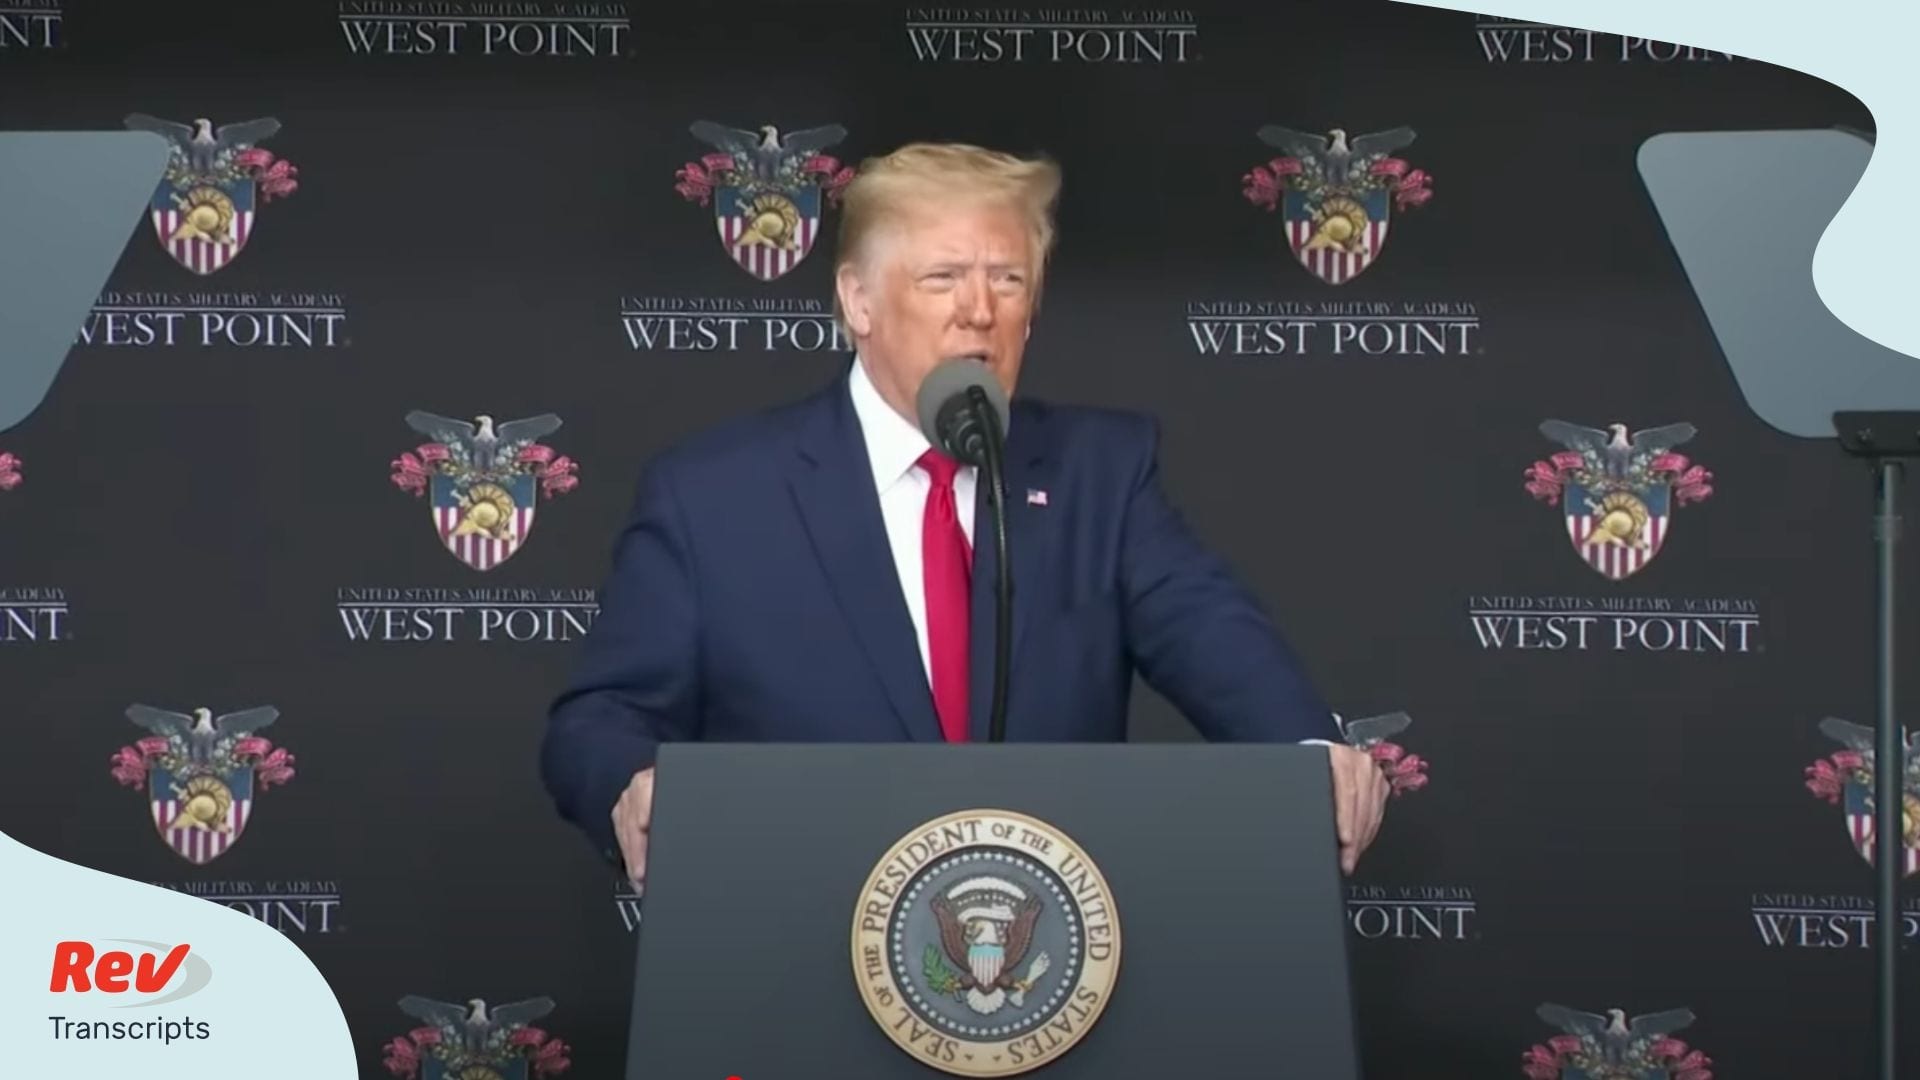 Donald Trump West Point Commencement Speech 2020